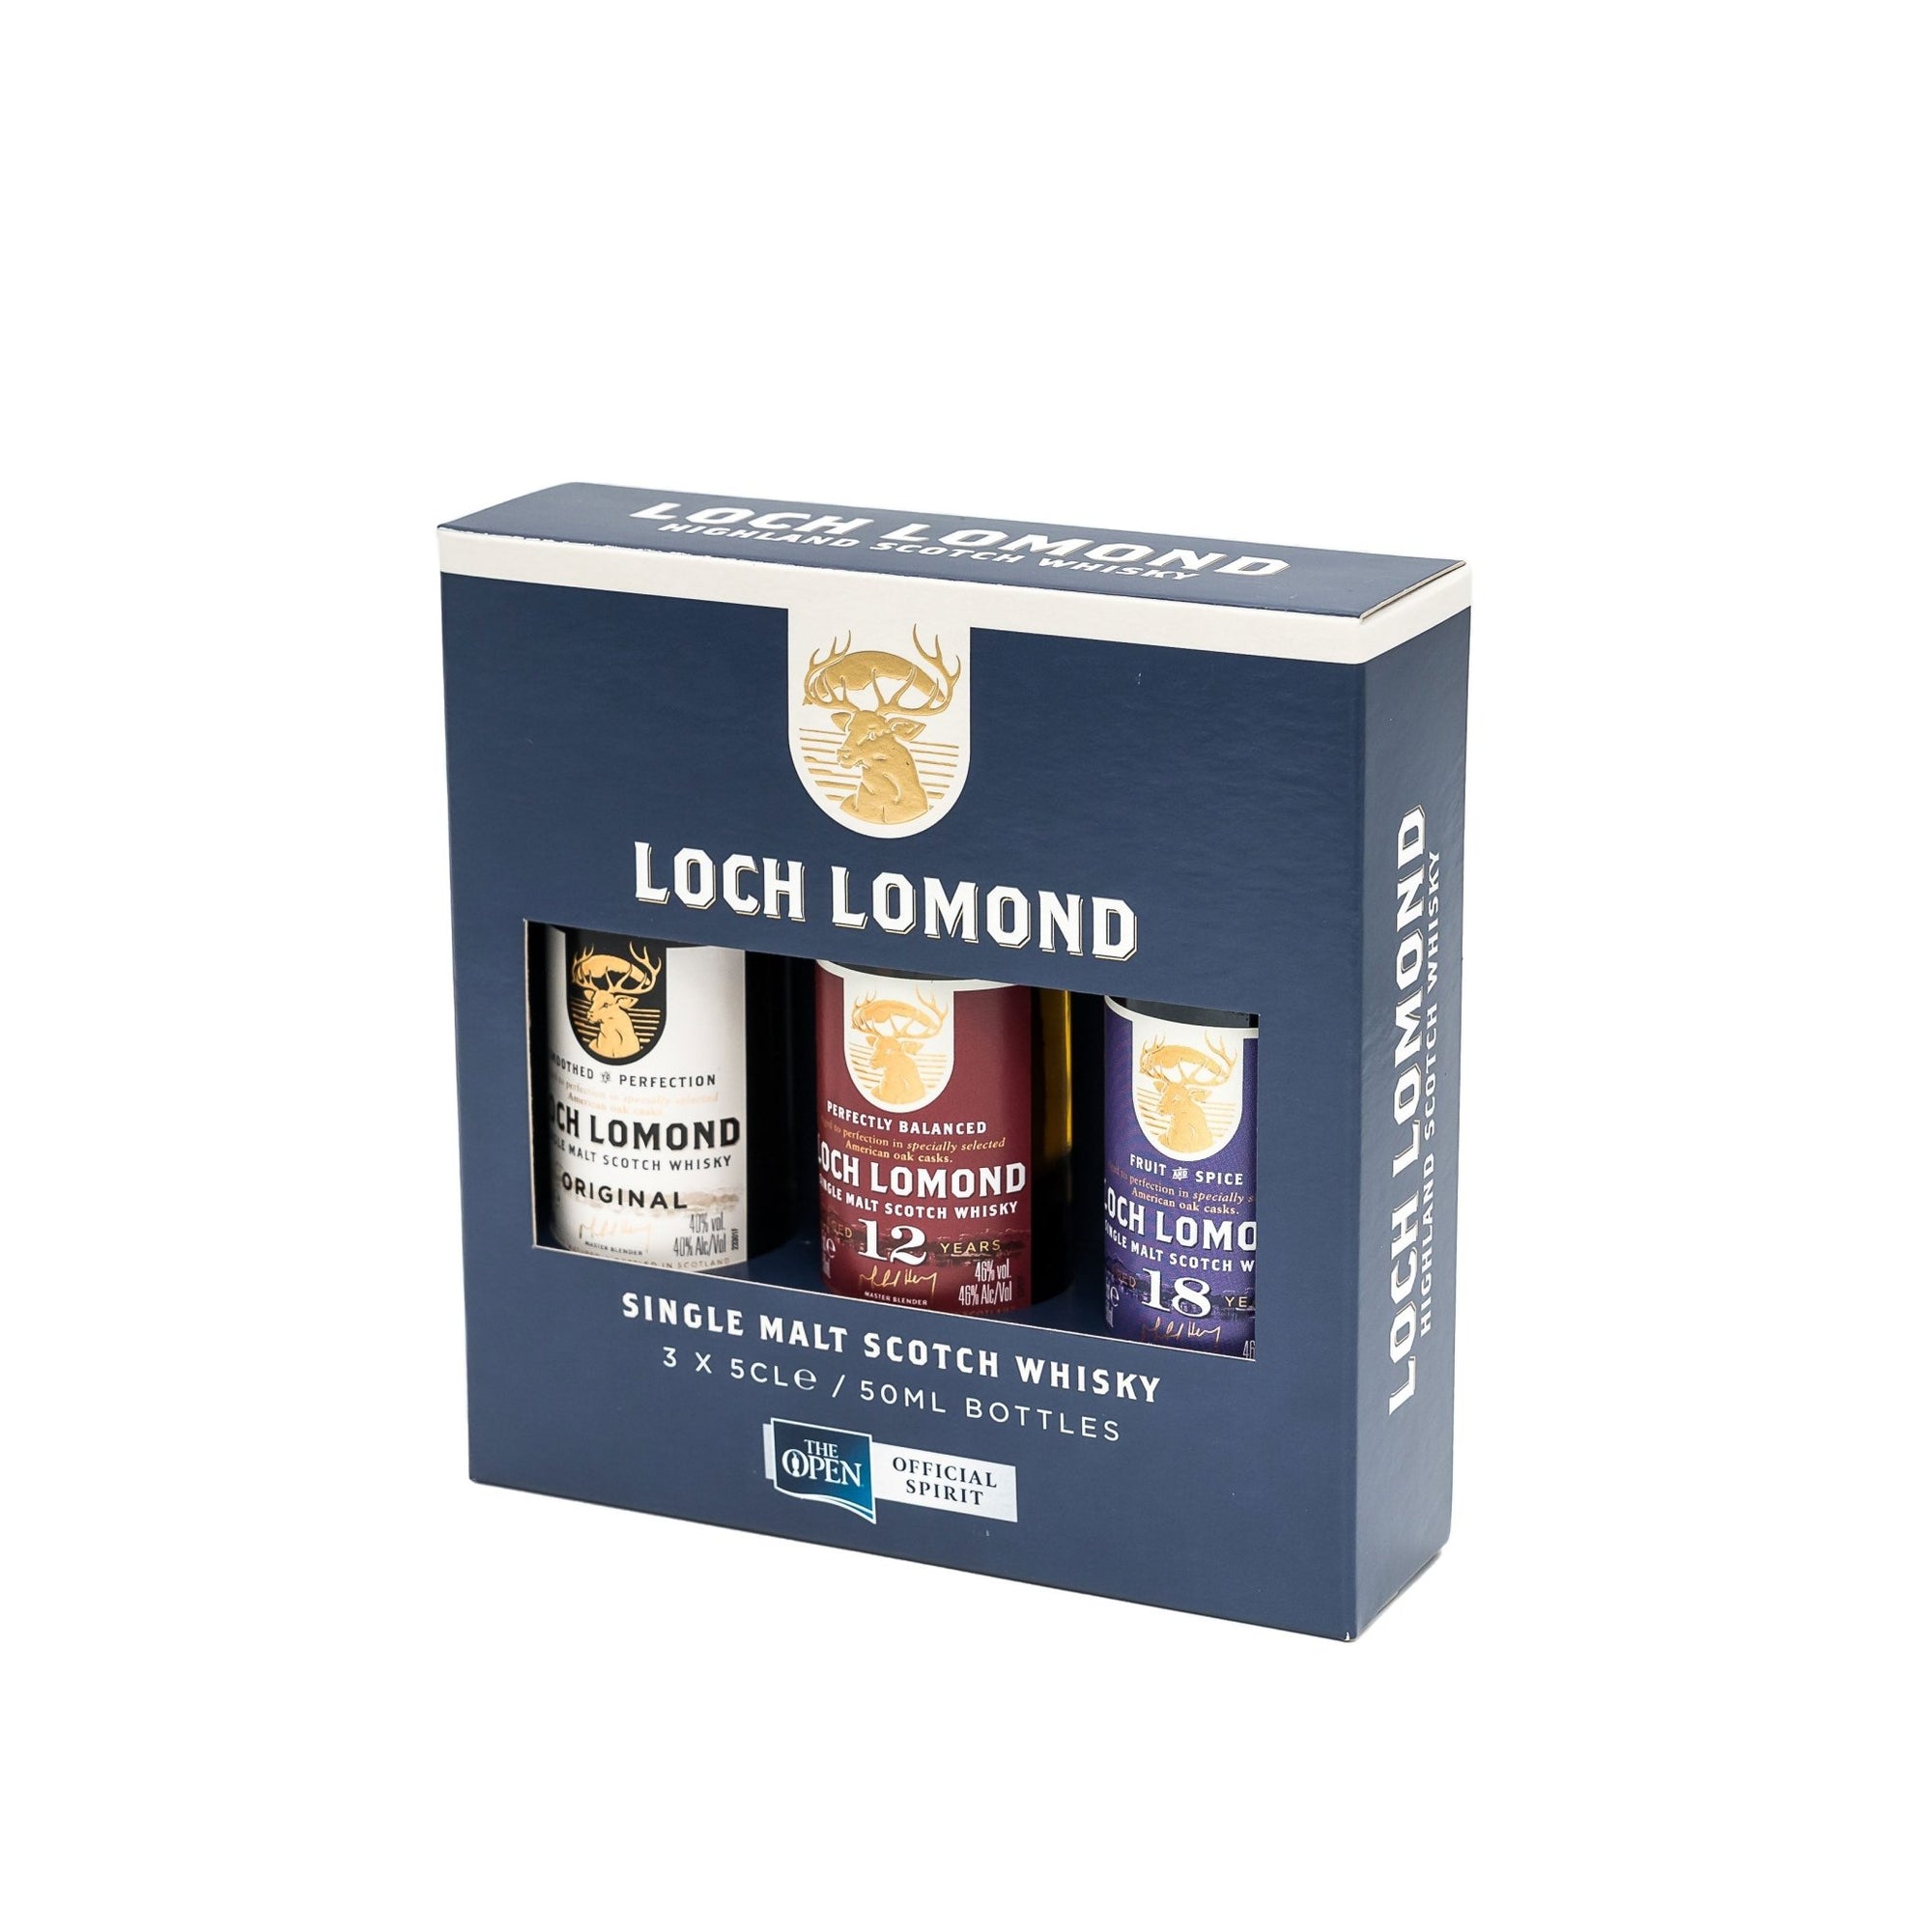 Loch Lomond Original, 12 & 18 Year Old Whisky Tasting Gift Set (3x5cl) - Loch Lomond Group